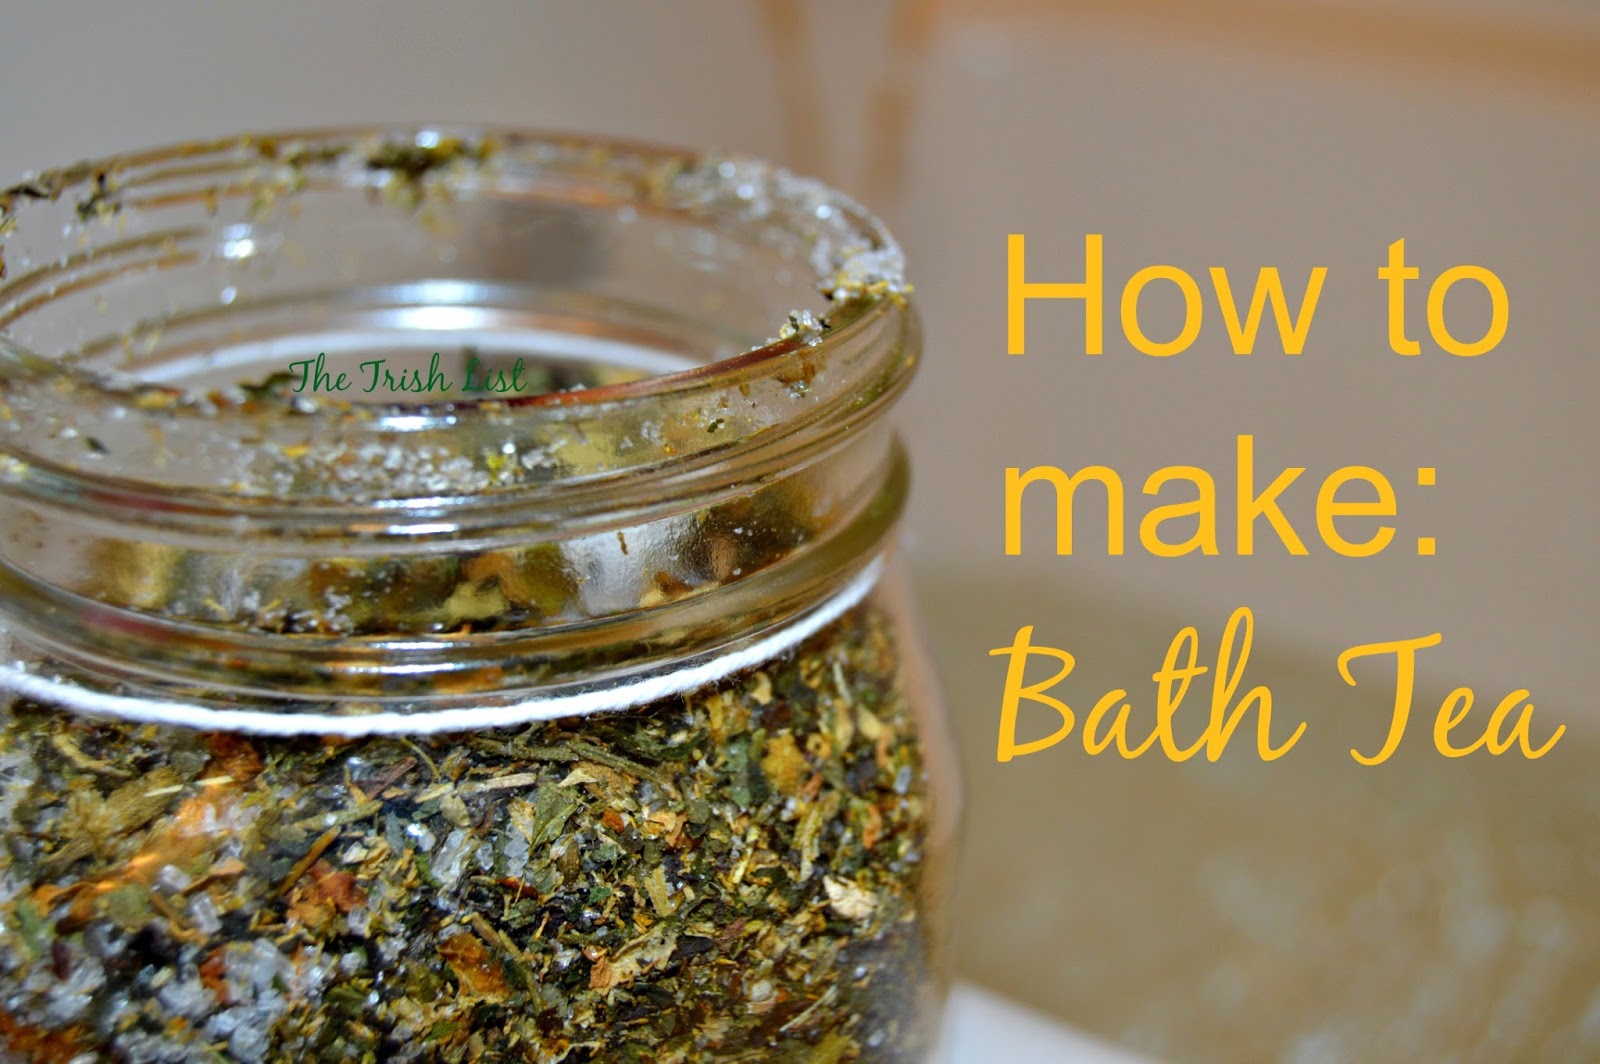 How to: Herbal Bath Teas - The Trish List